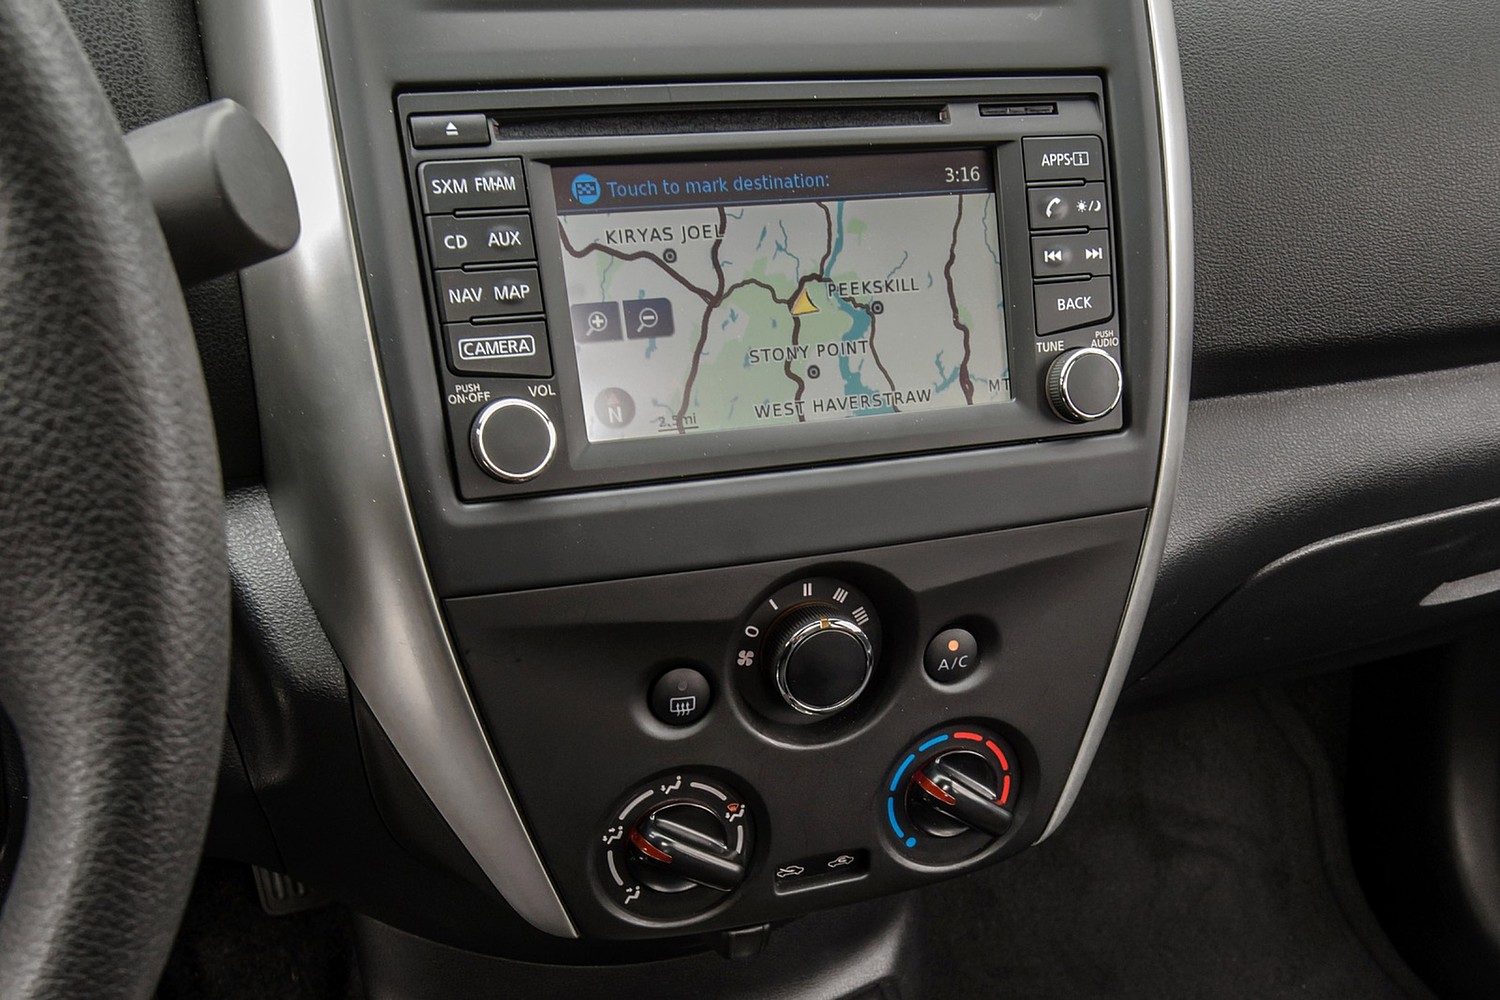 Nissan Versa 1.6 SL Sedan Center Console (2015 model year shown)